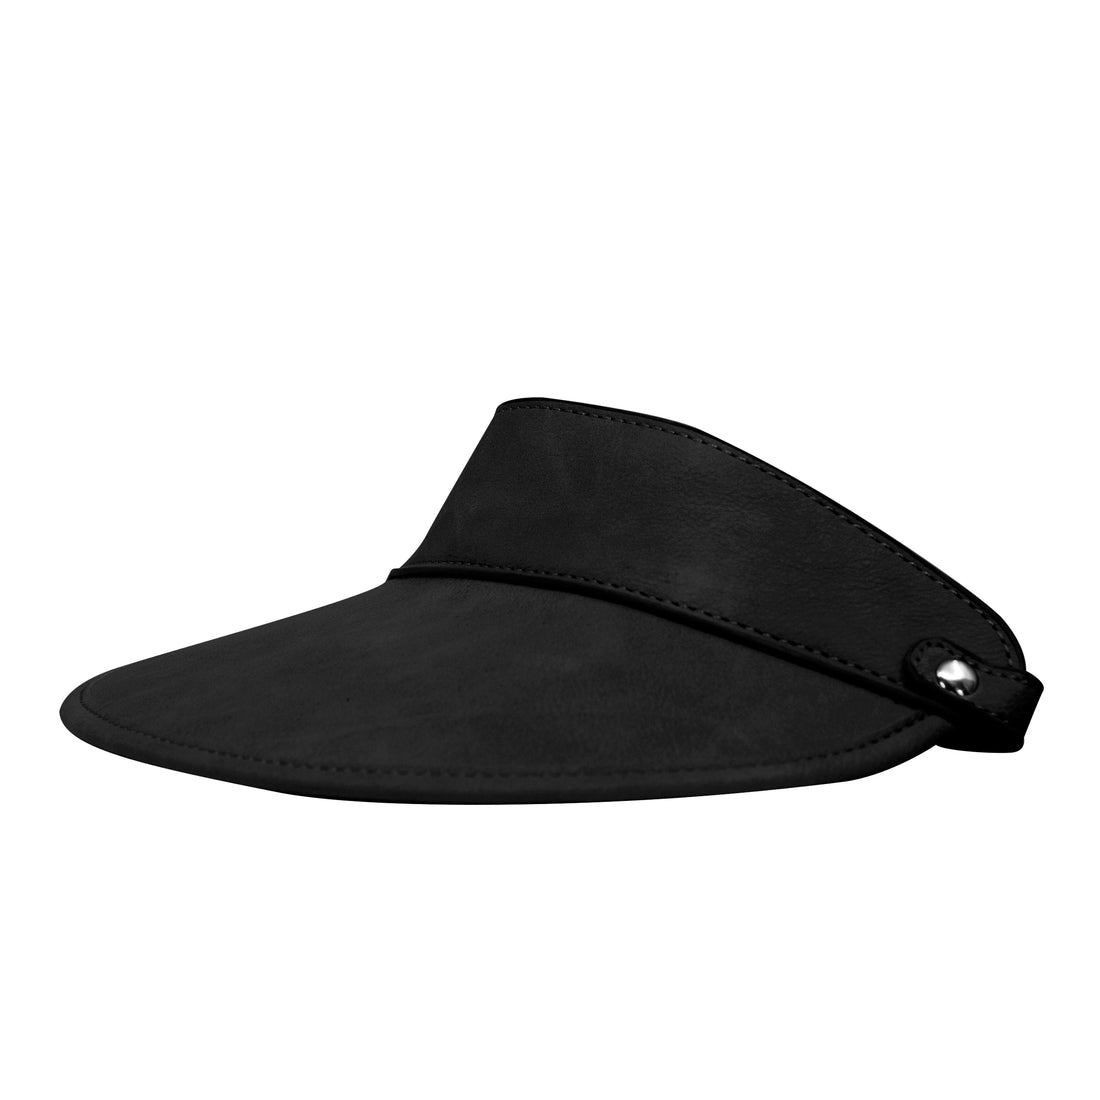 Amsterdam Black - vegan leather visor